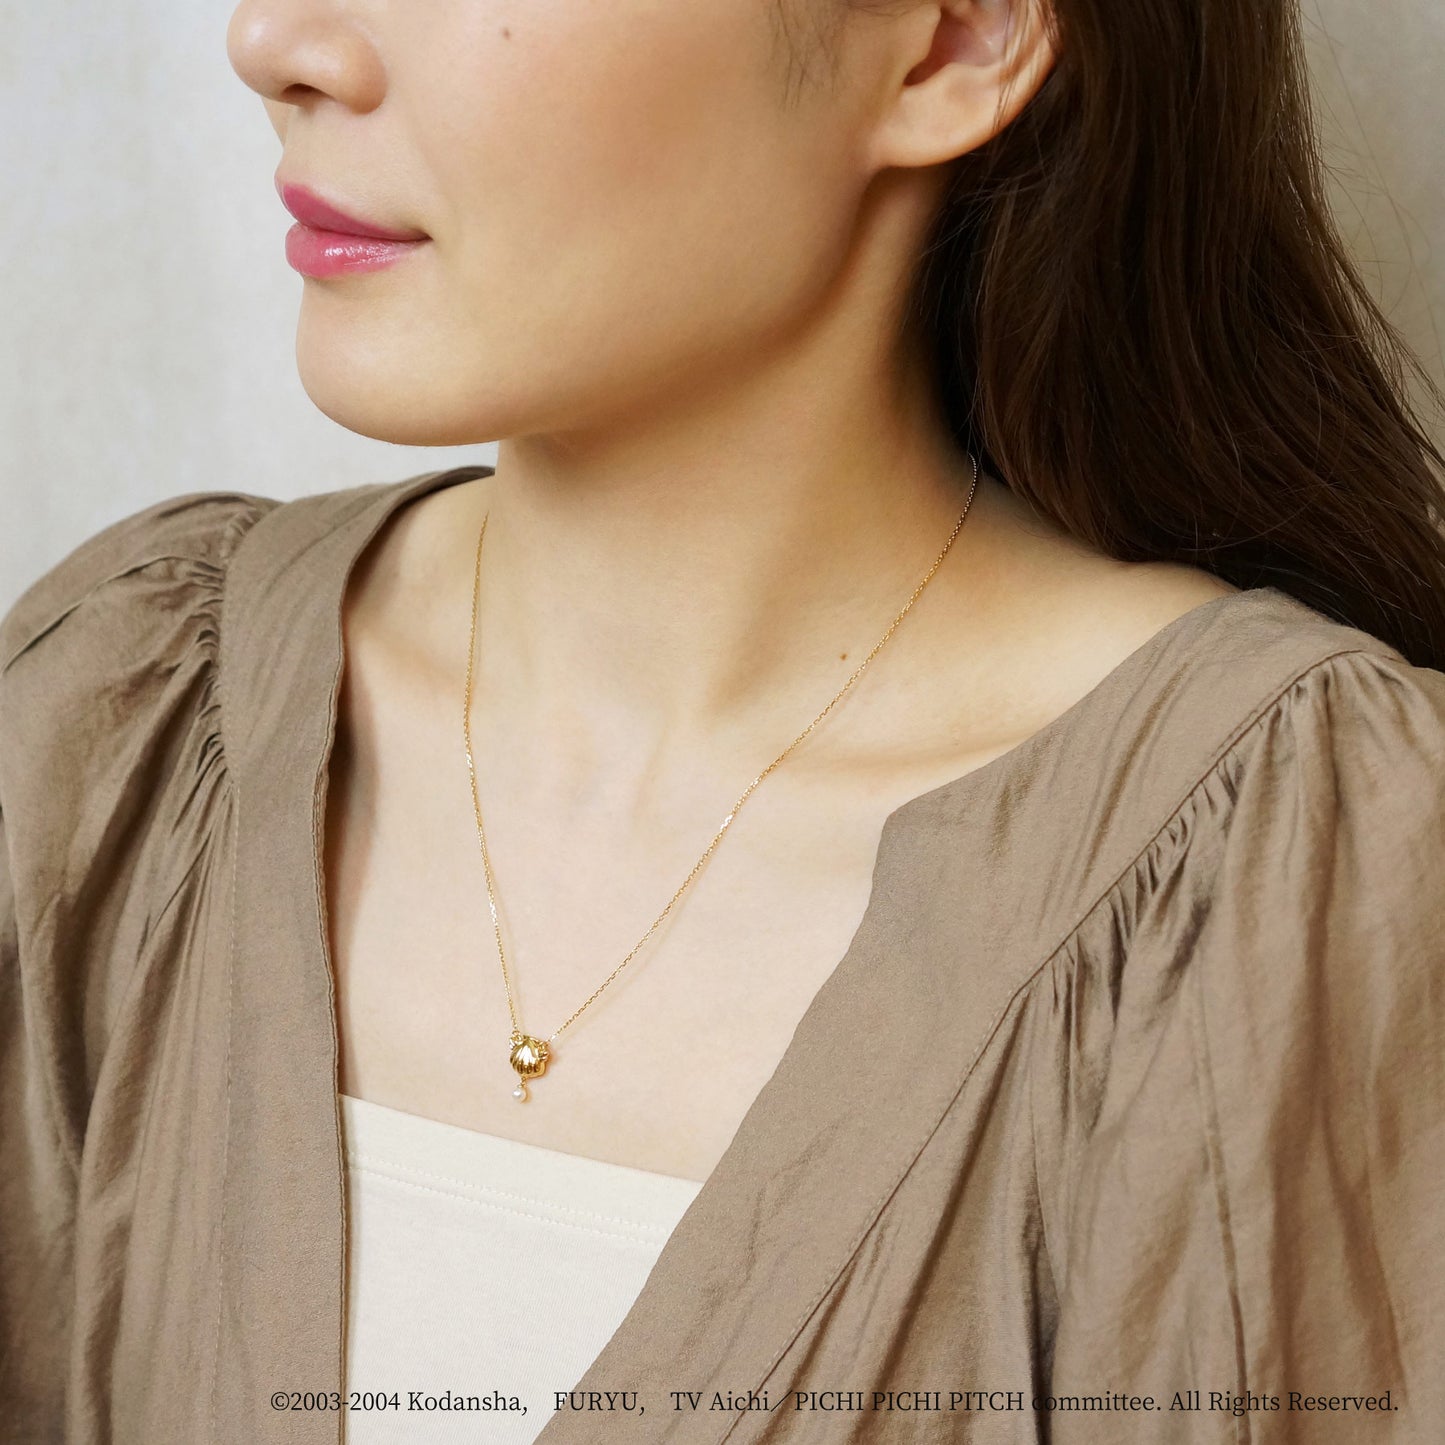 Mermaid Melody Pichi Pichi Pitch - Reversible Necklace (Hanon Hosho) - Model Image